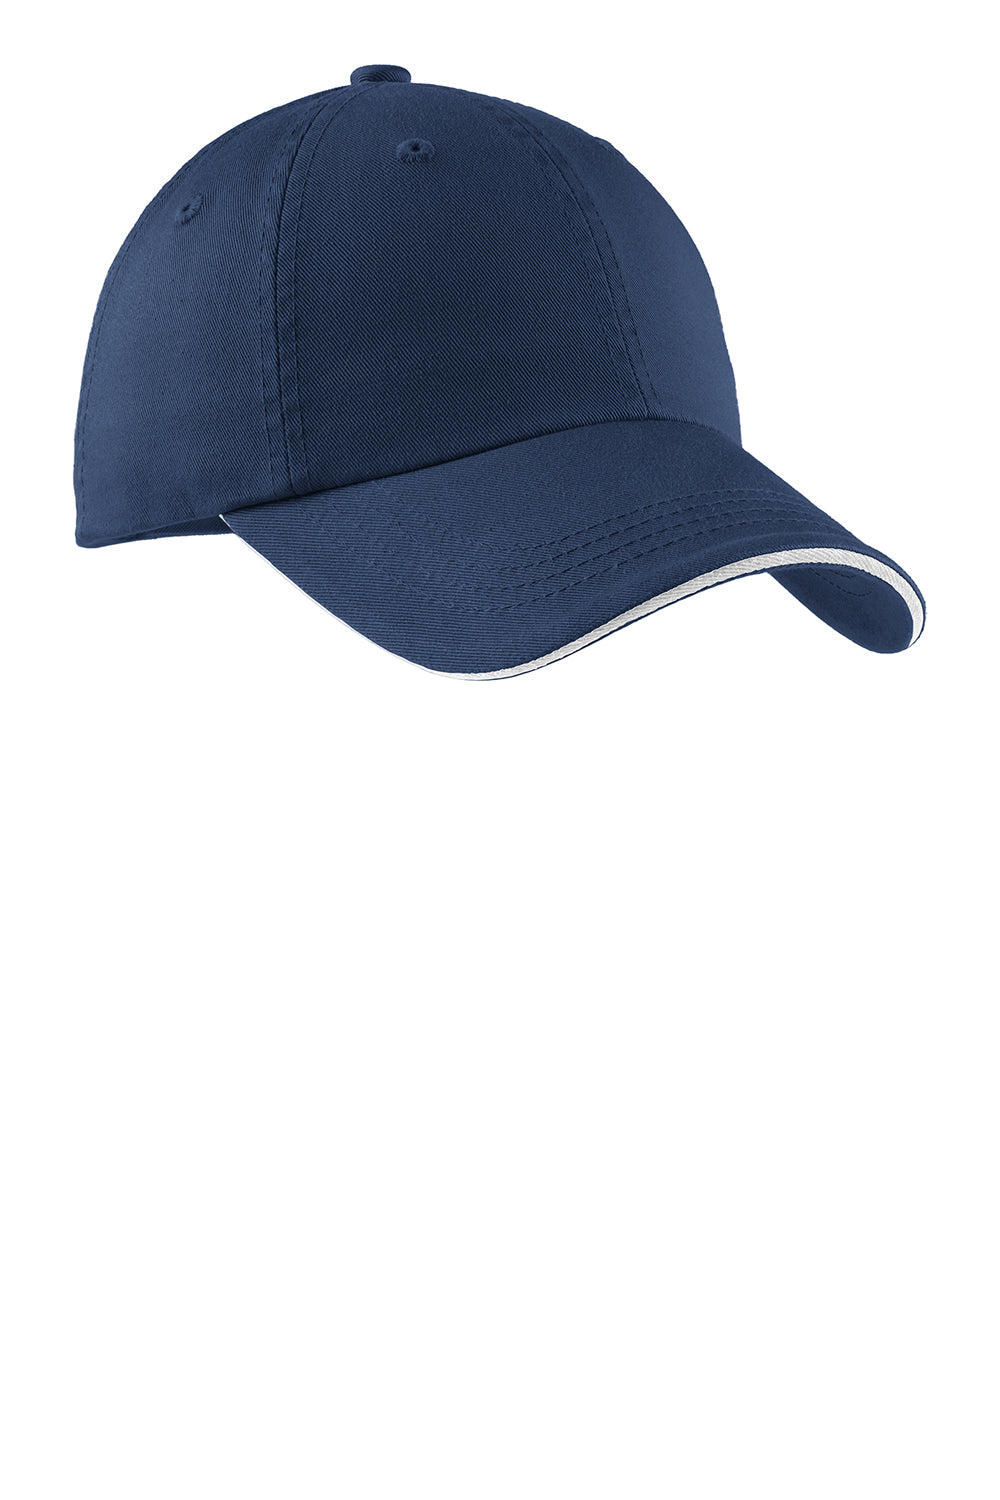 Port Authority C830 Mens Adjustable Hat Ensign Blue/White Front